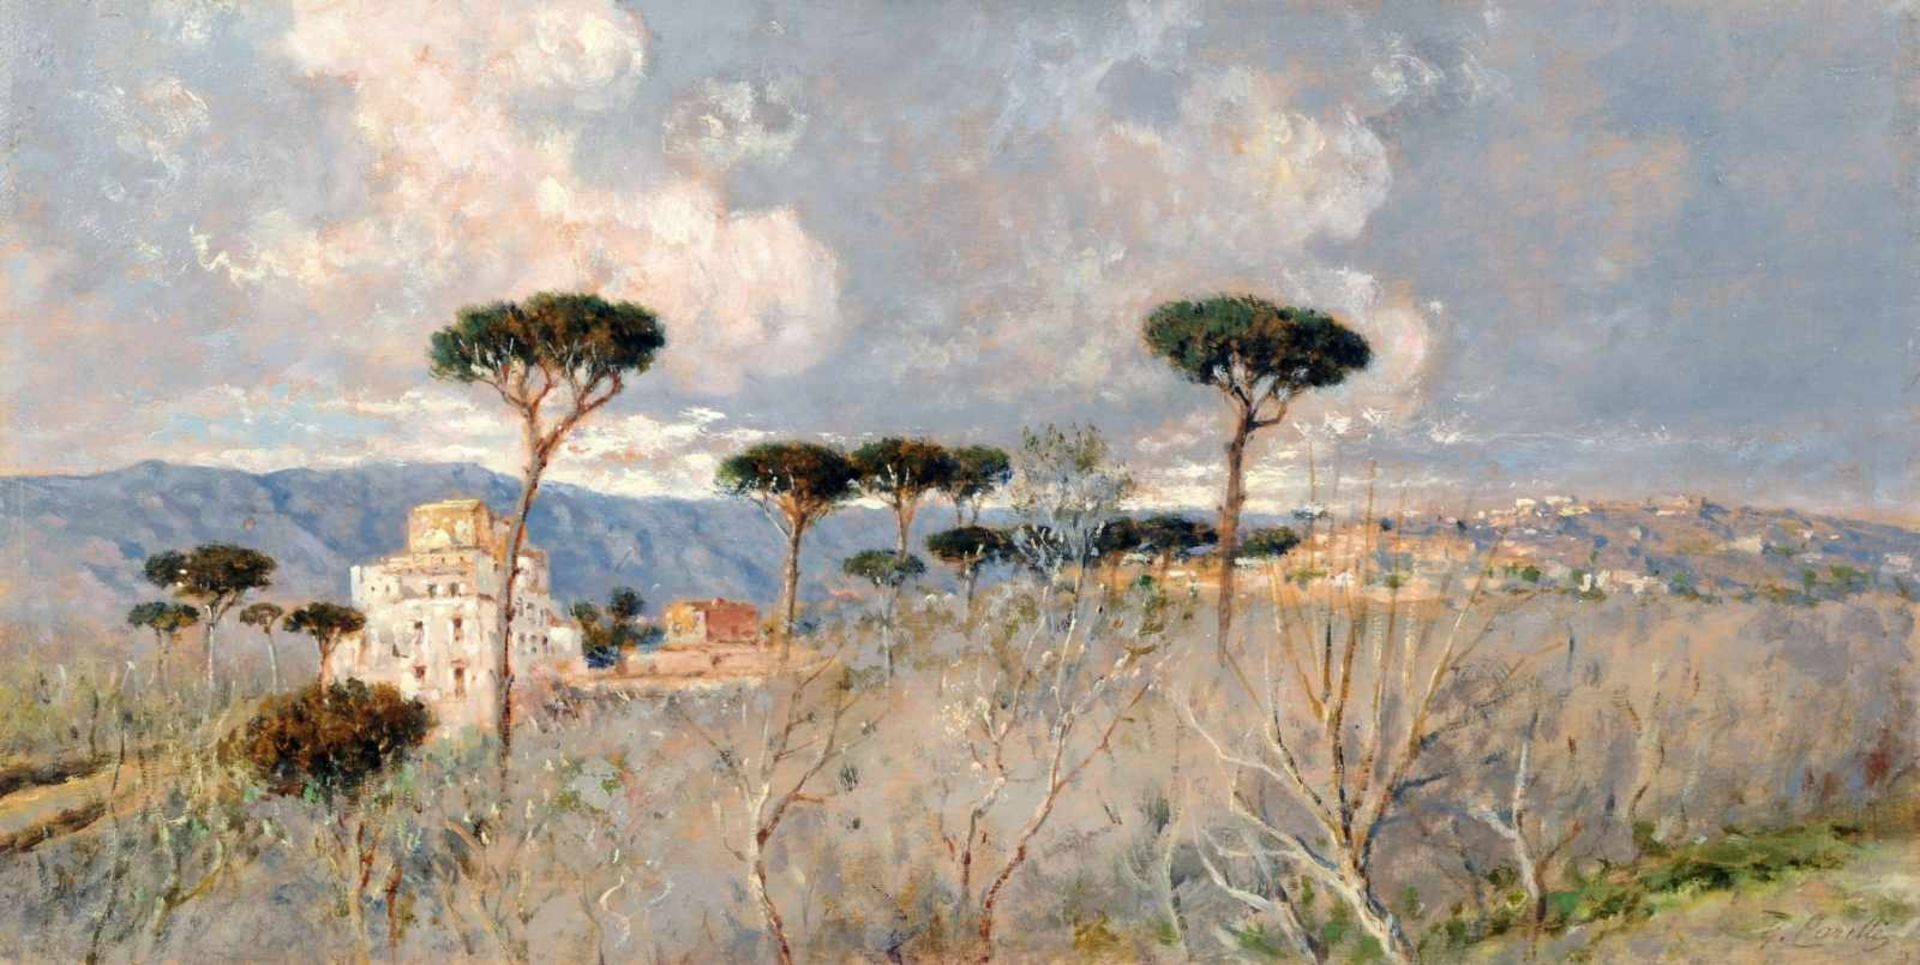 Giuseppe Carelli, Neapolitanische Landschaft mit Pinien. Anfang 20. Jh. Öl auf Holz. Signiert "G.